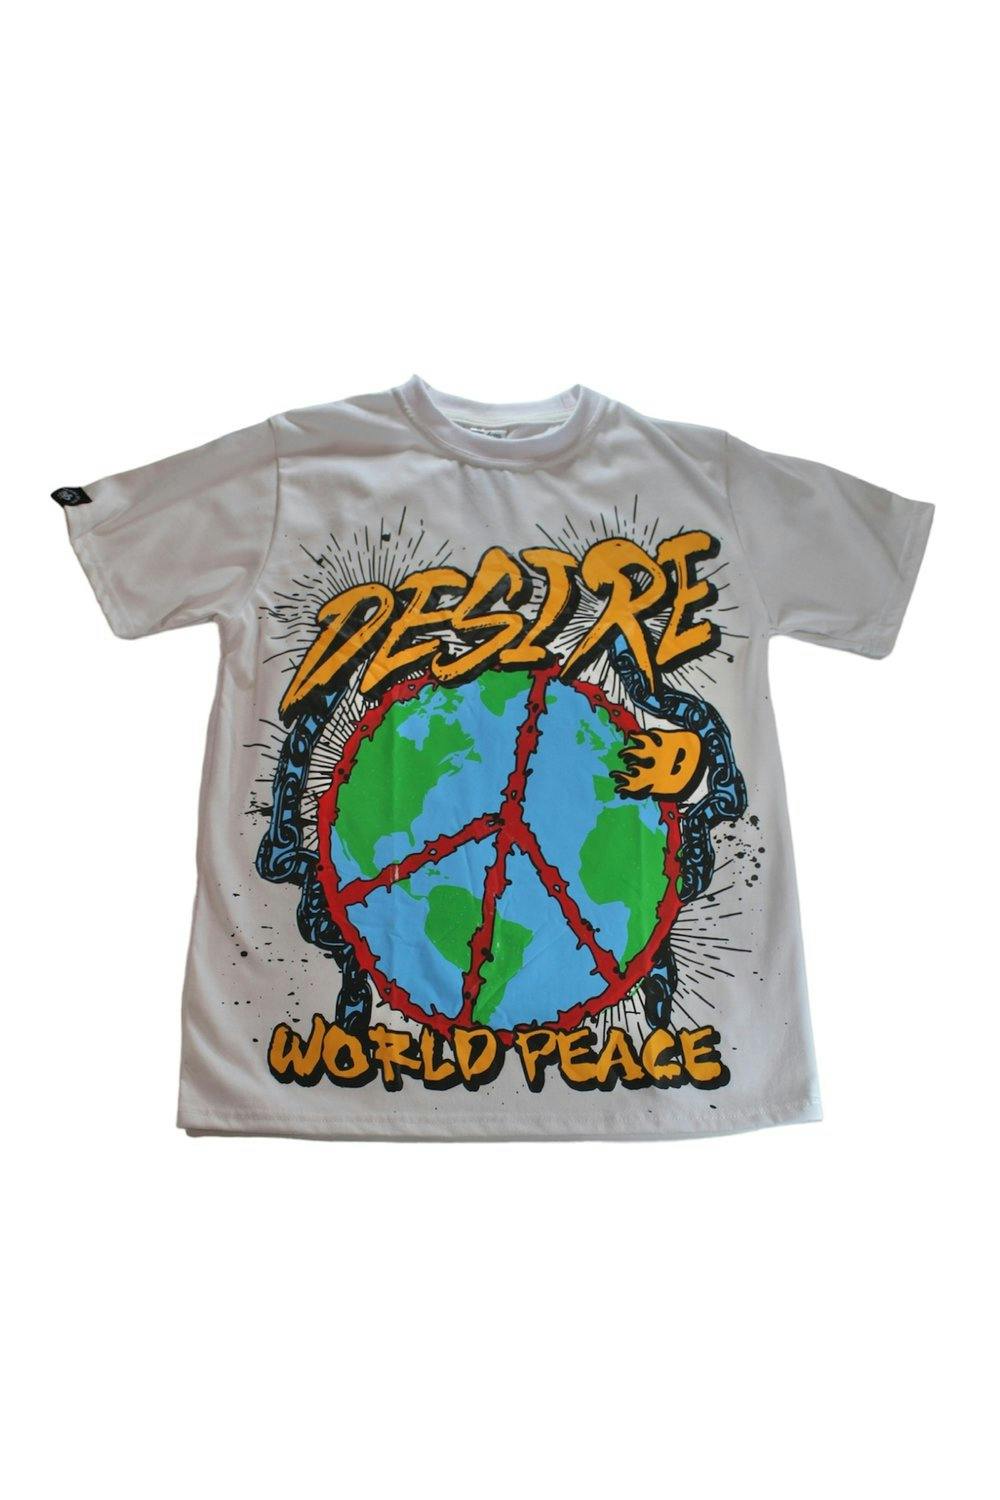 DESIRE WORLD PEACE T-SHIRT